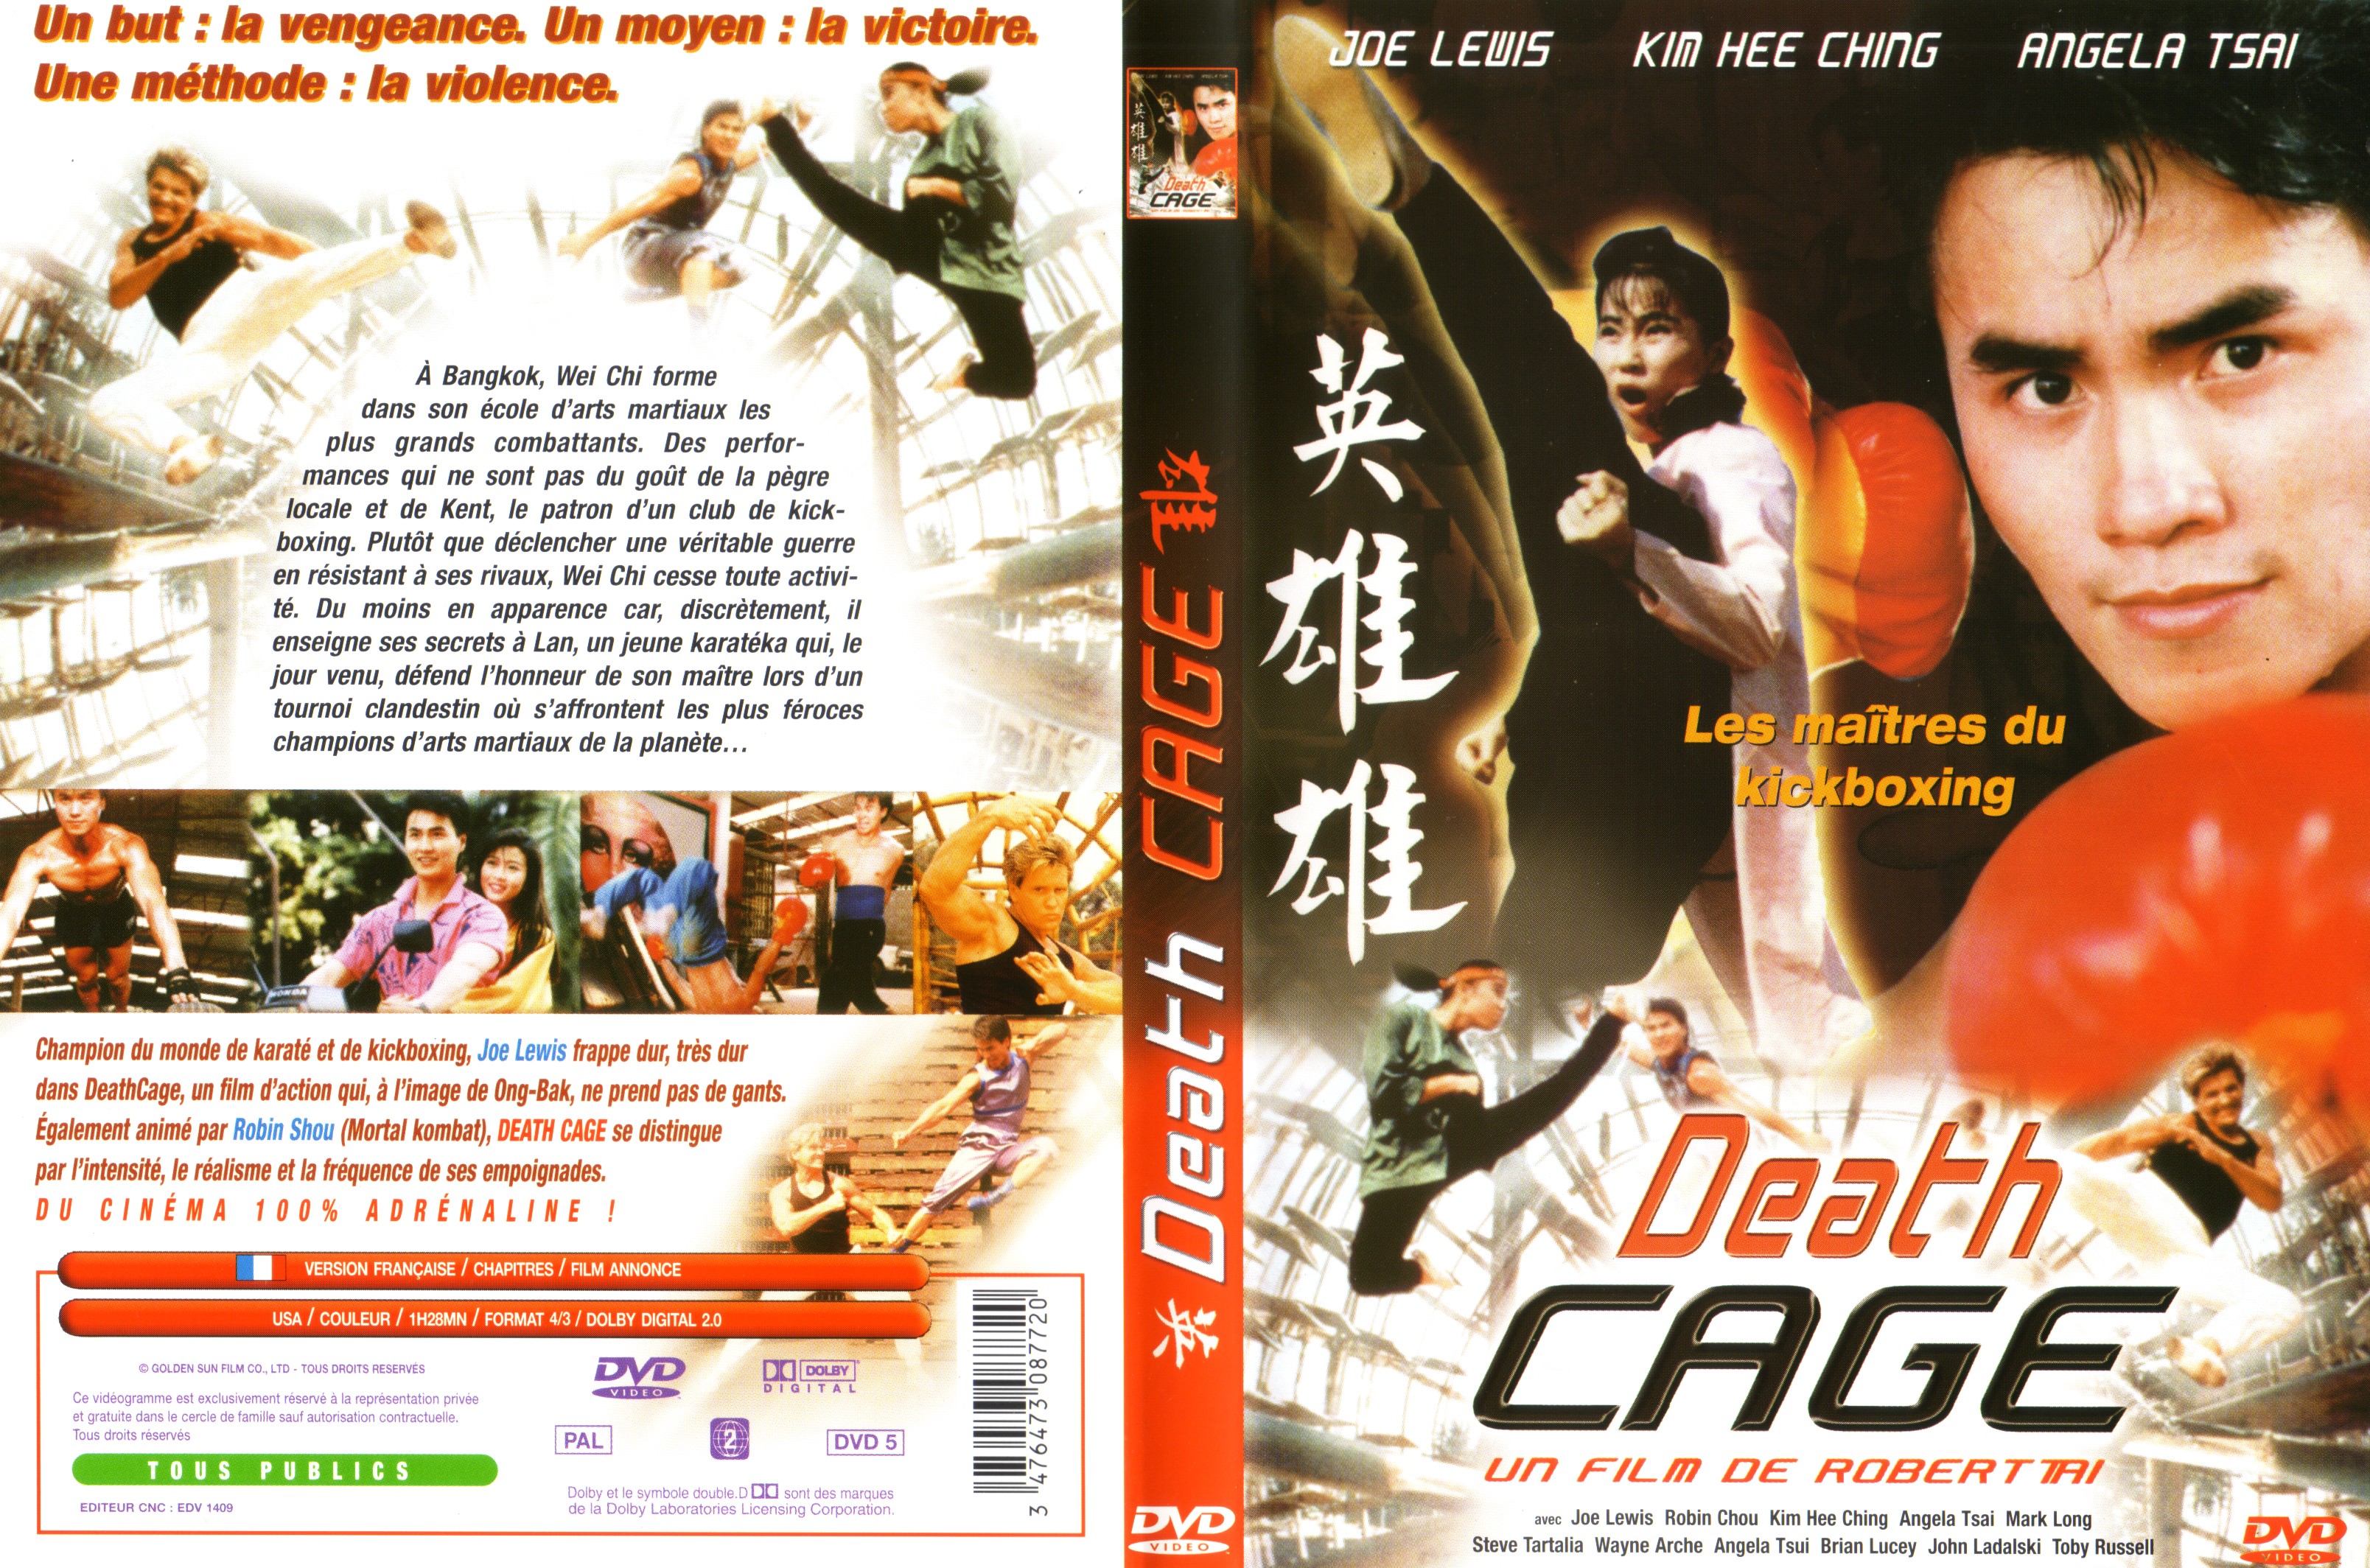 Jaquette DVD Death cage